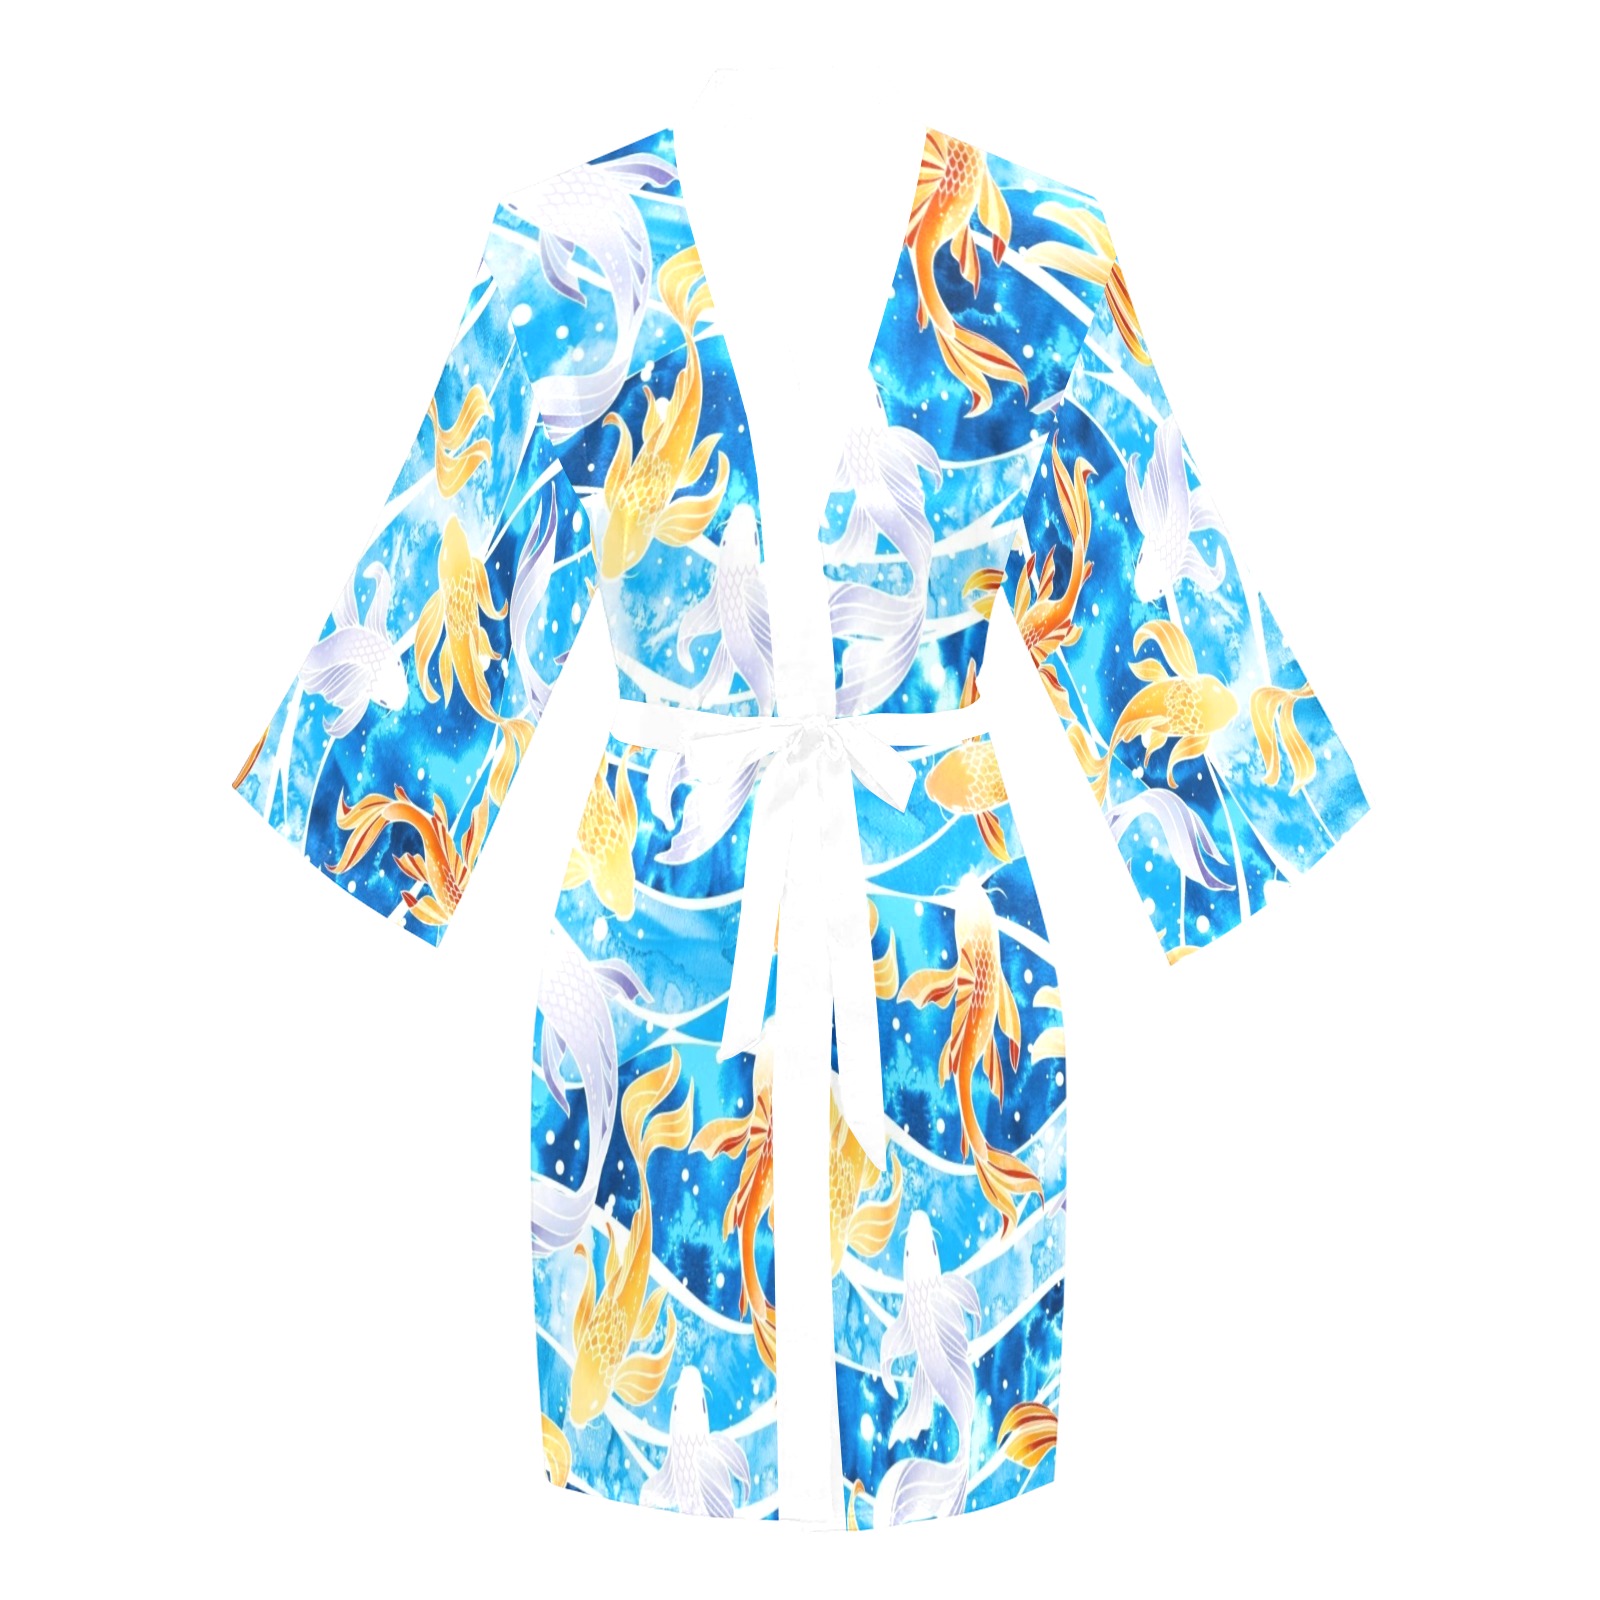 KOI FISH 001 Long Sleeve Kimono Robe